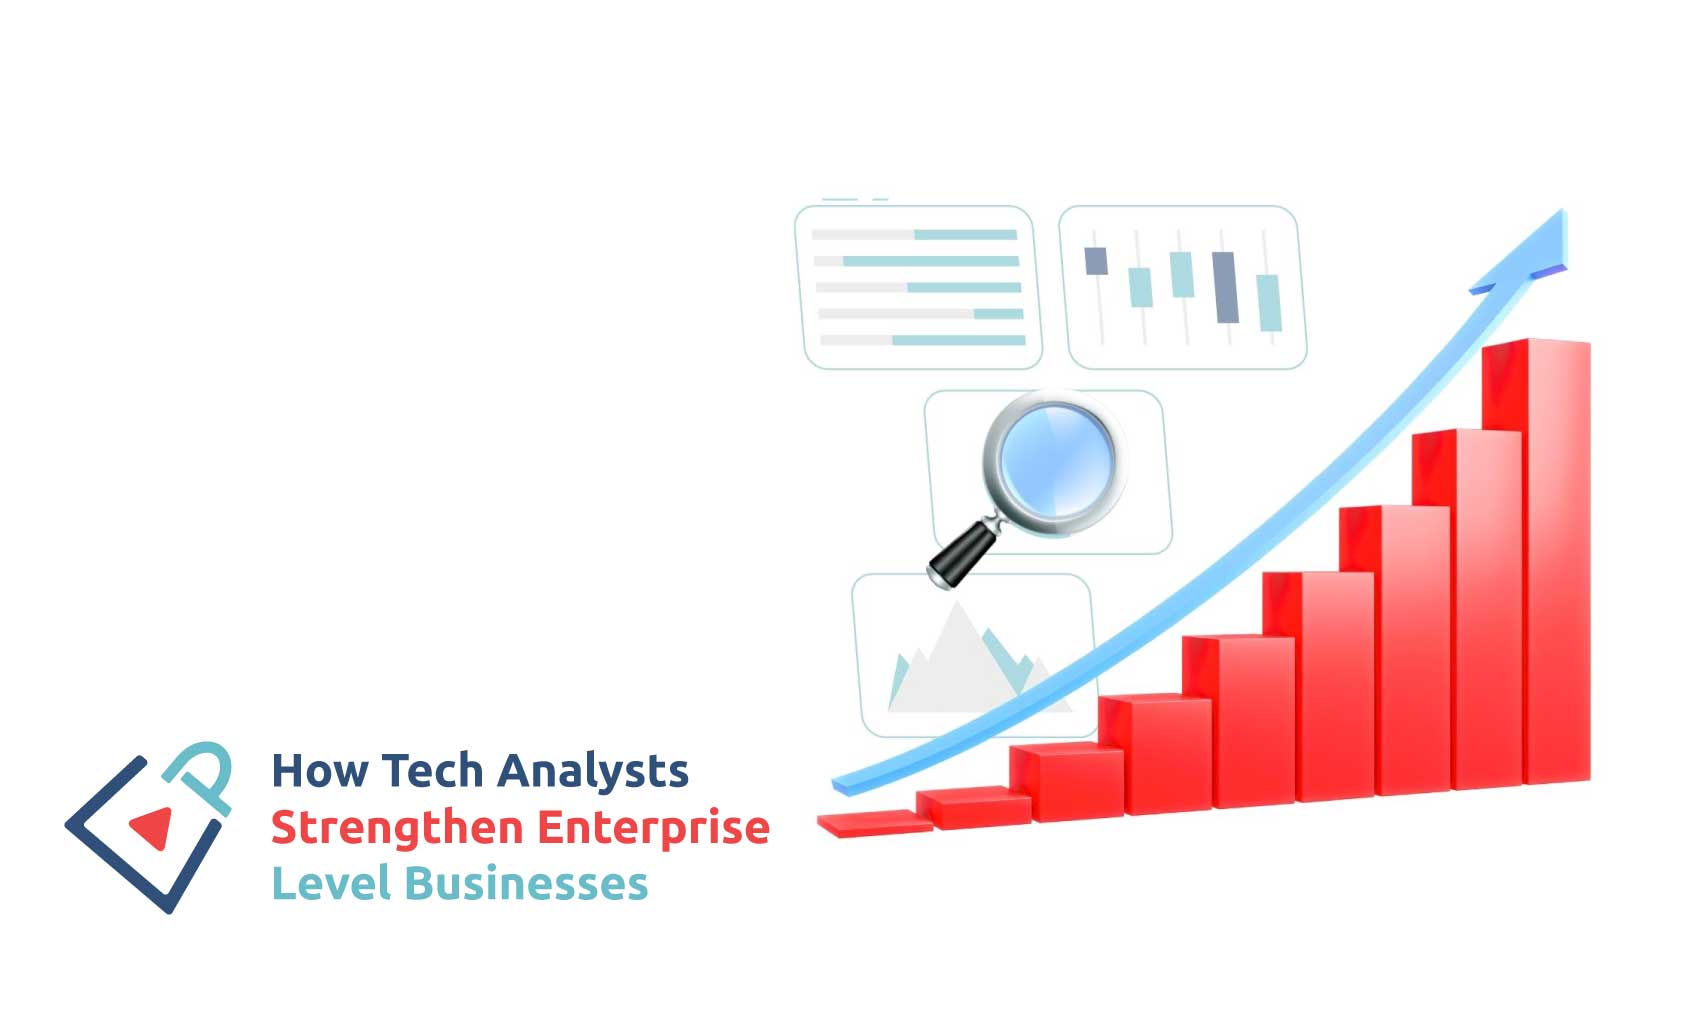 How Tech Analysts benefit enterprise businesses